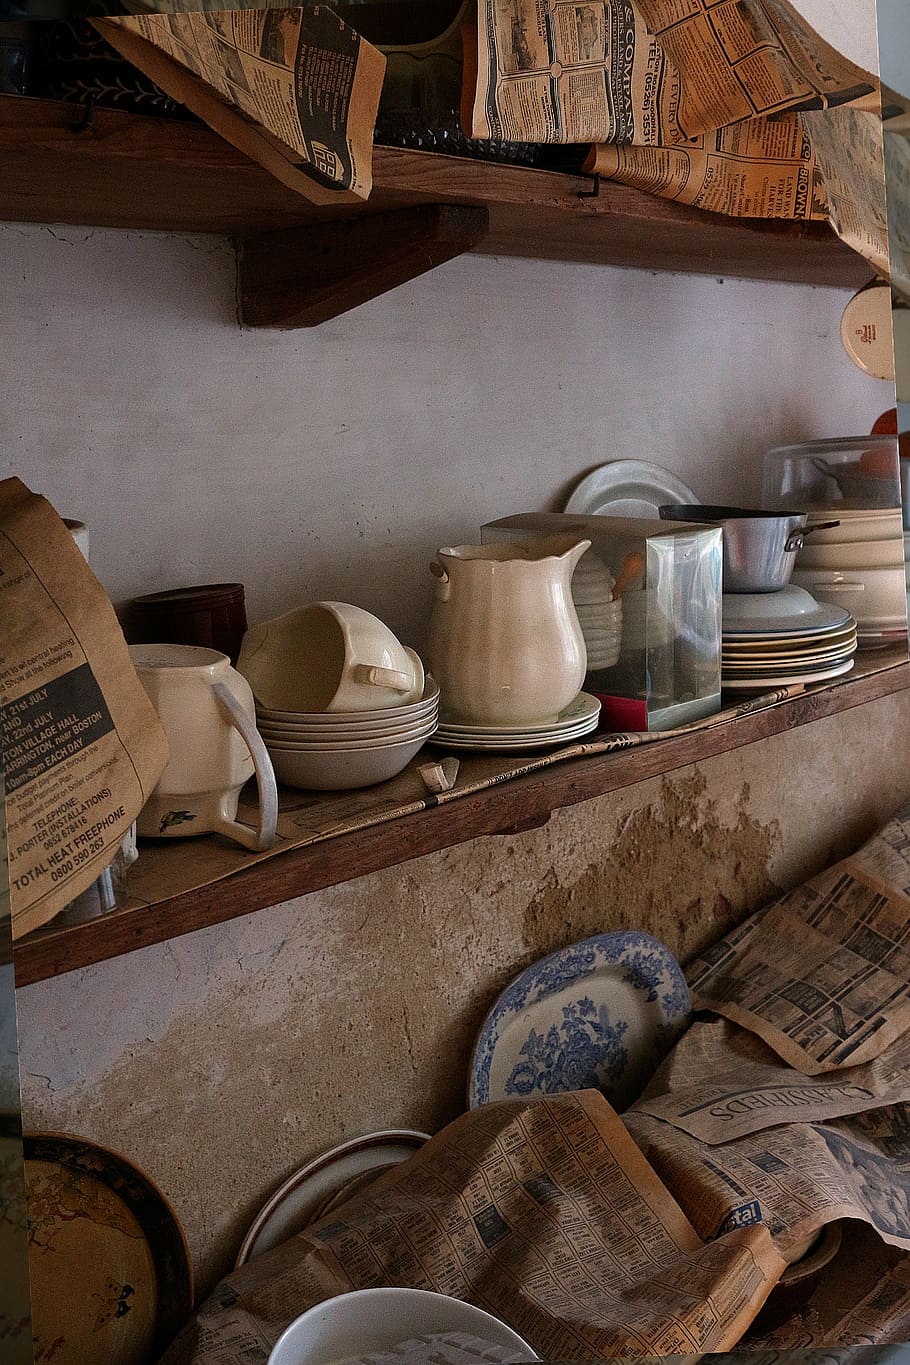 shelf, old pots, vintage, pot, old, retro, rustic, interior, rough, kitchen